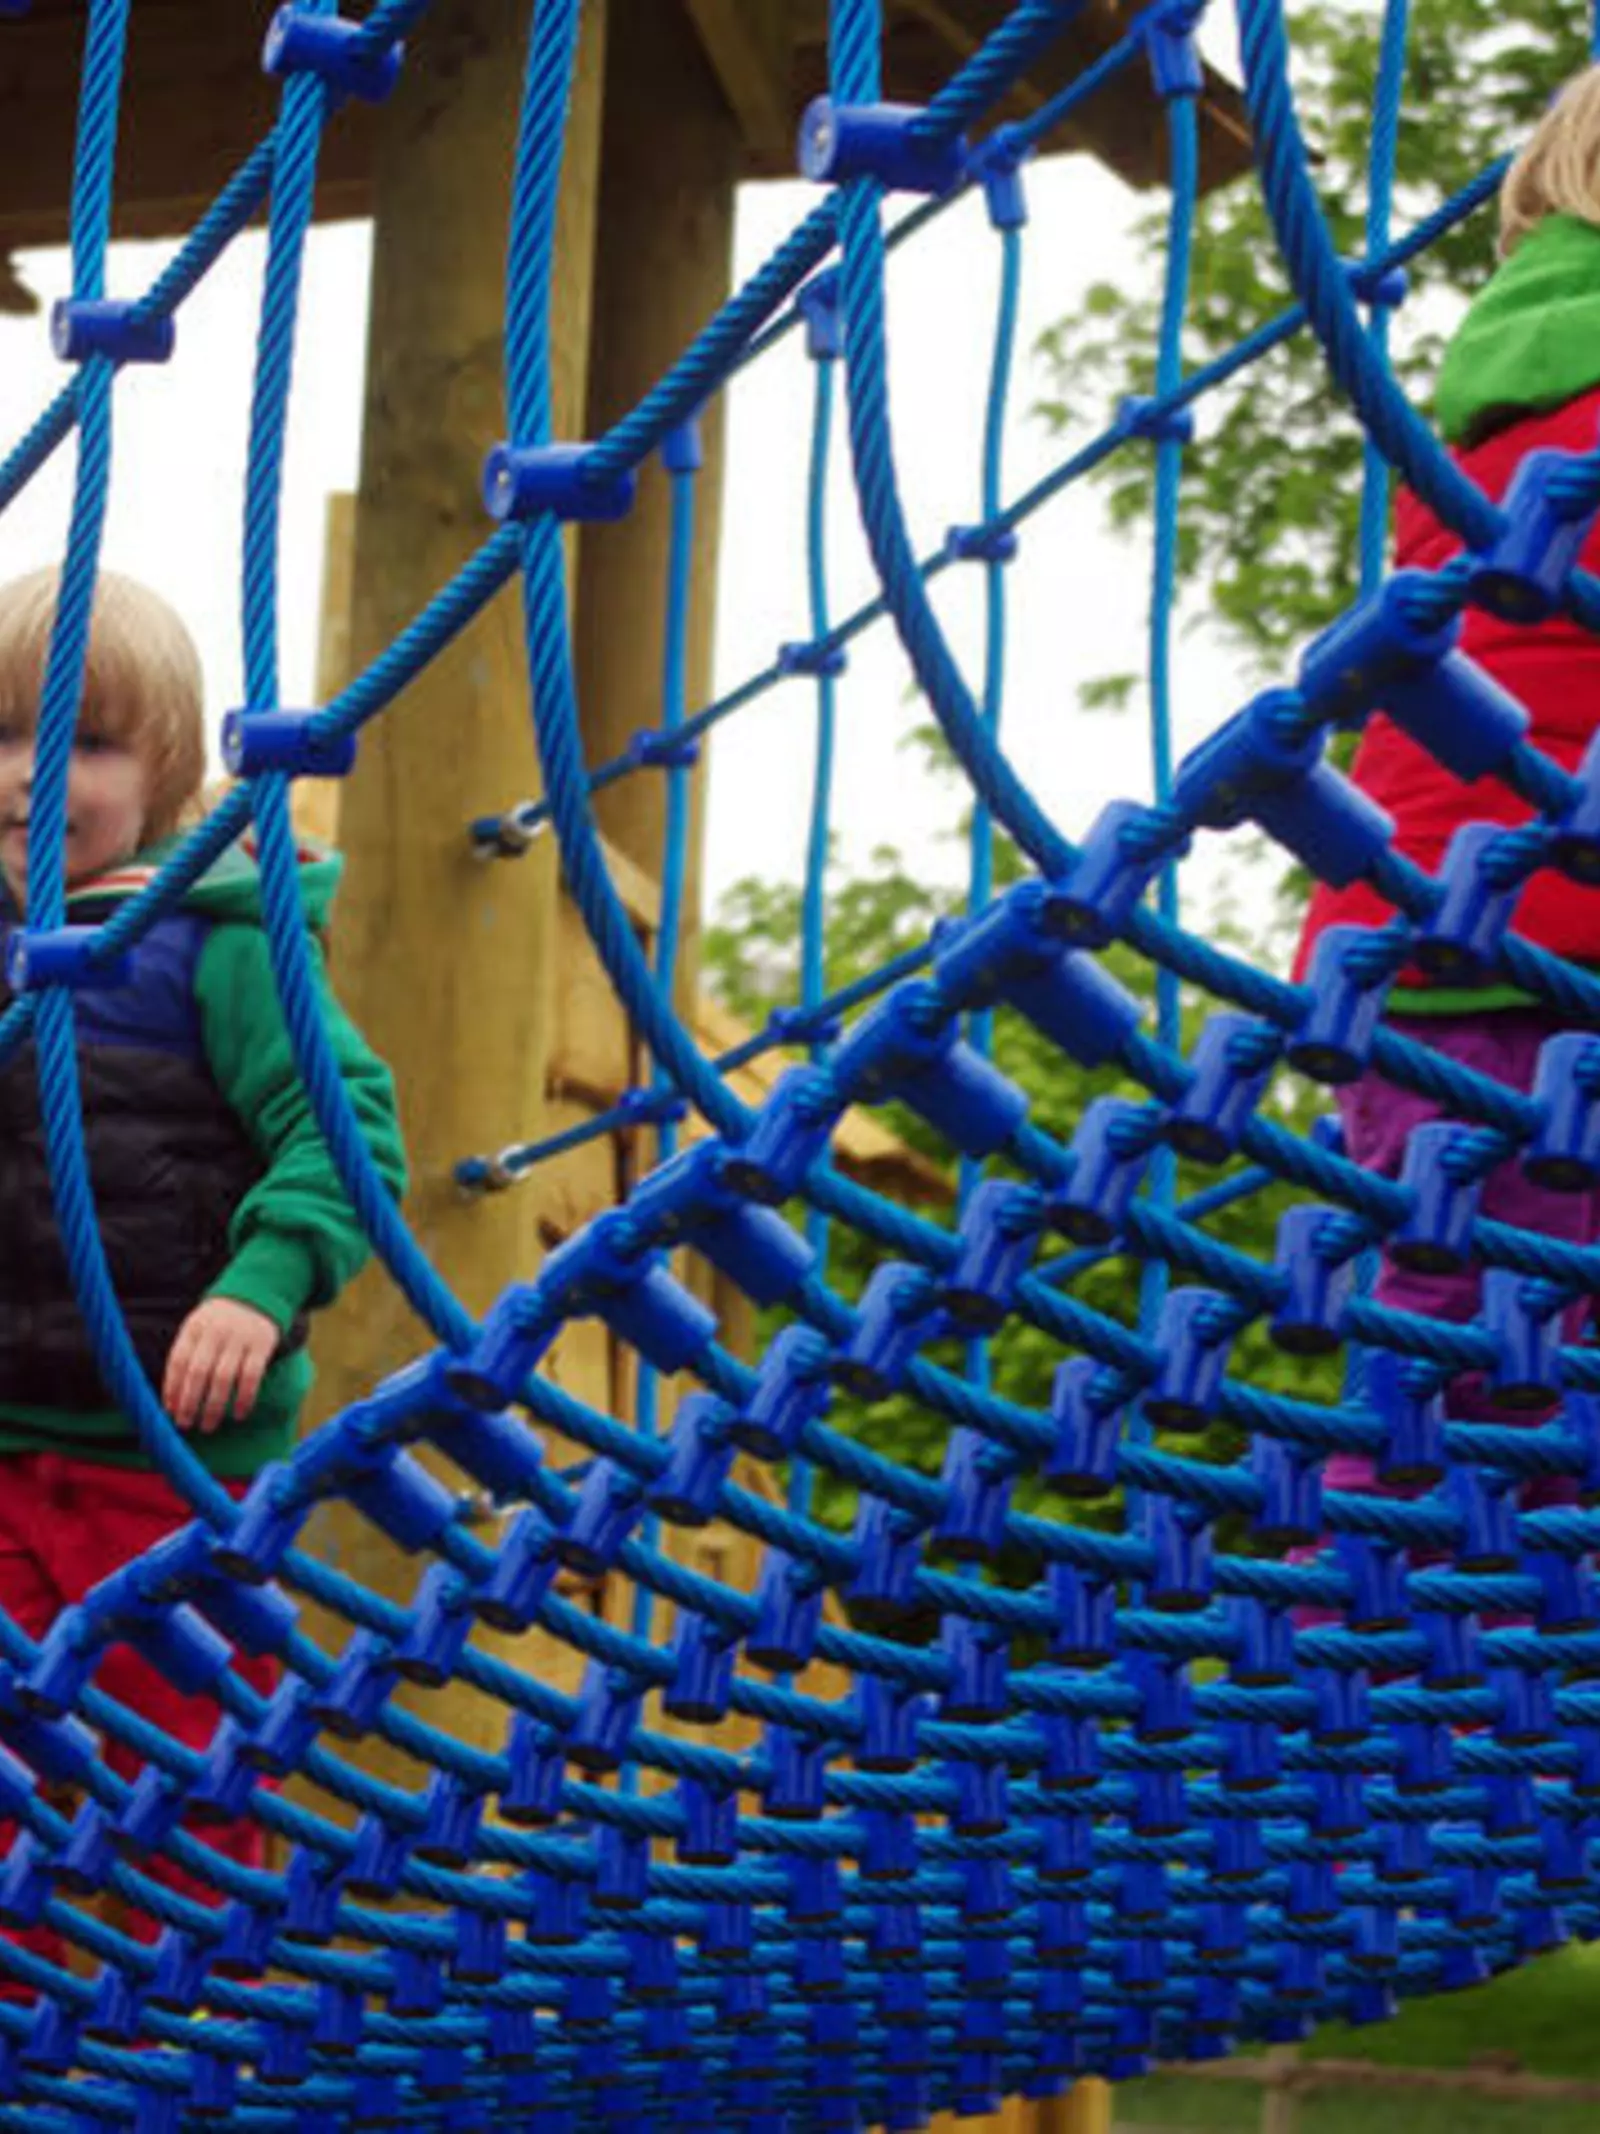 Hullbazoo kids adventure play park at Whipsnade Zoo